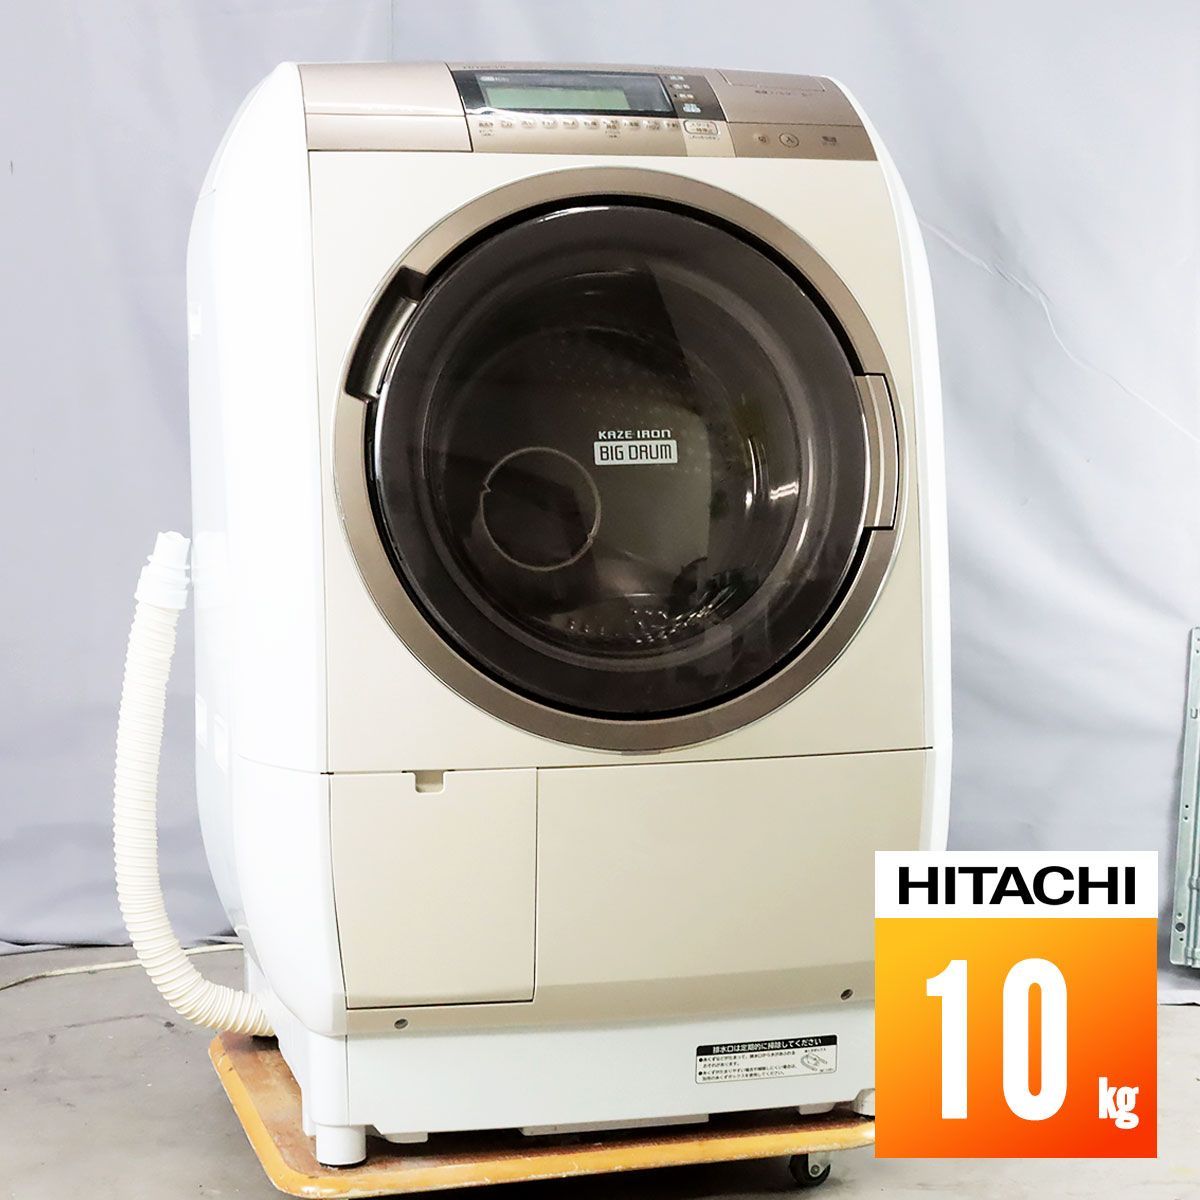 HITACHI ビッグドラム BD-S8600 10kg/6kg - 生活家電